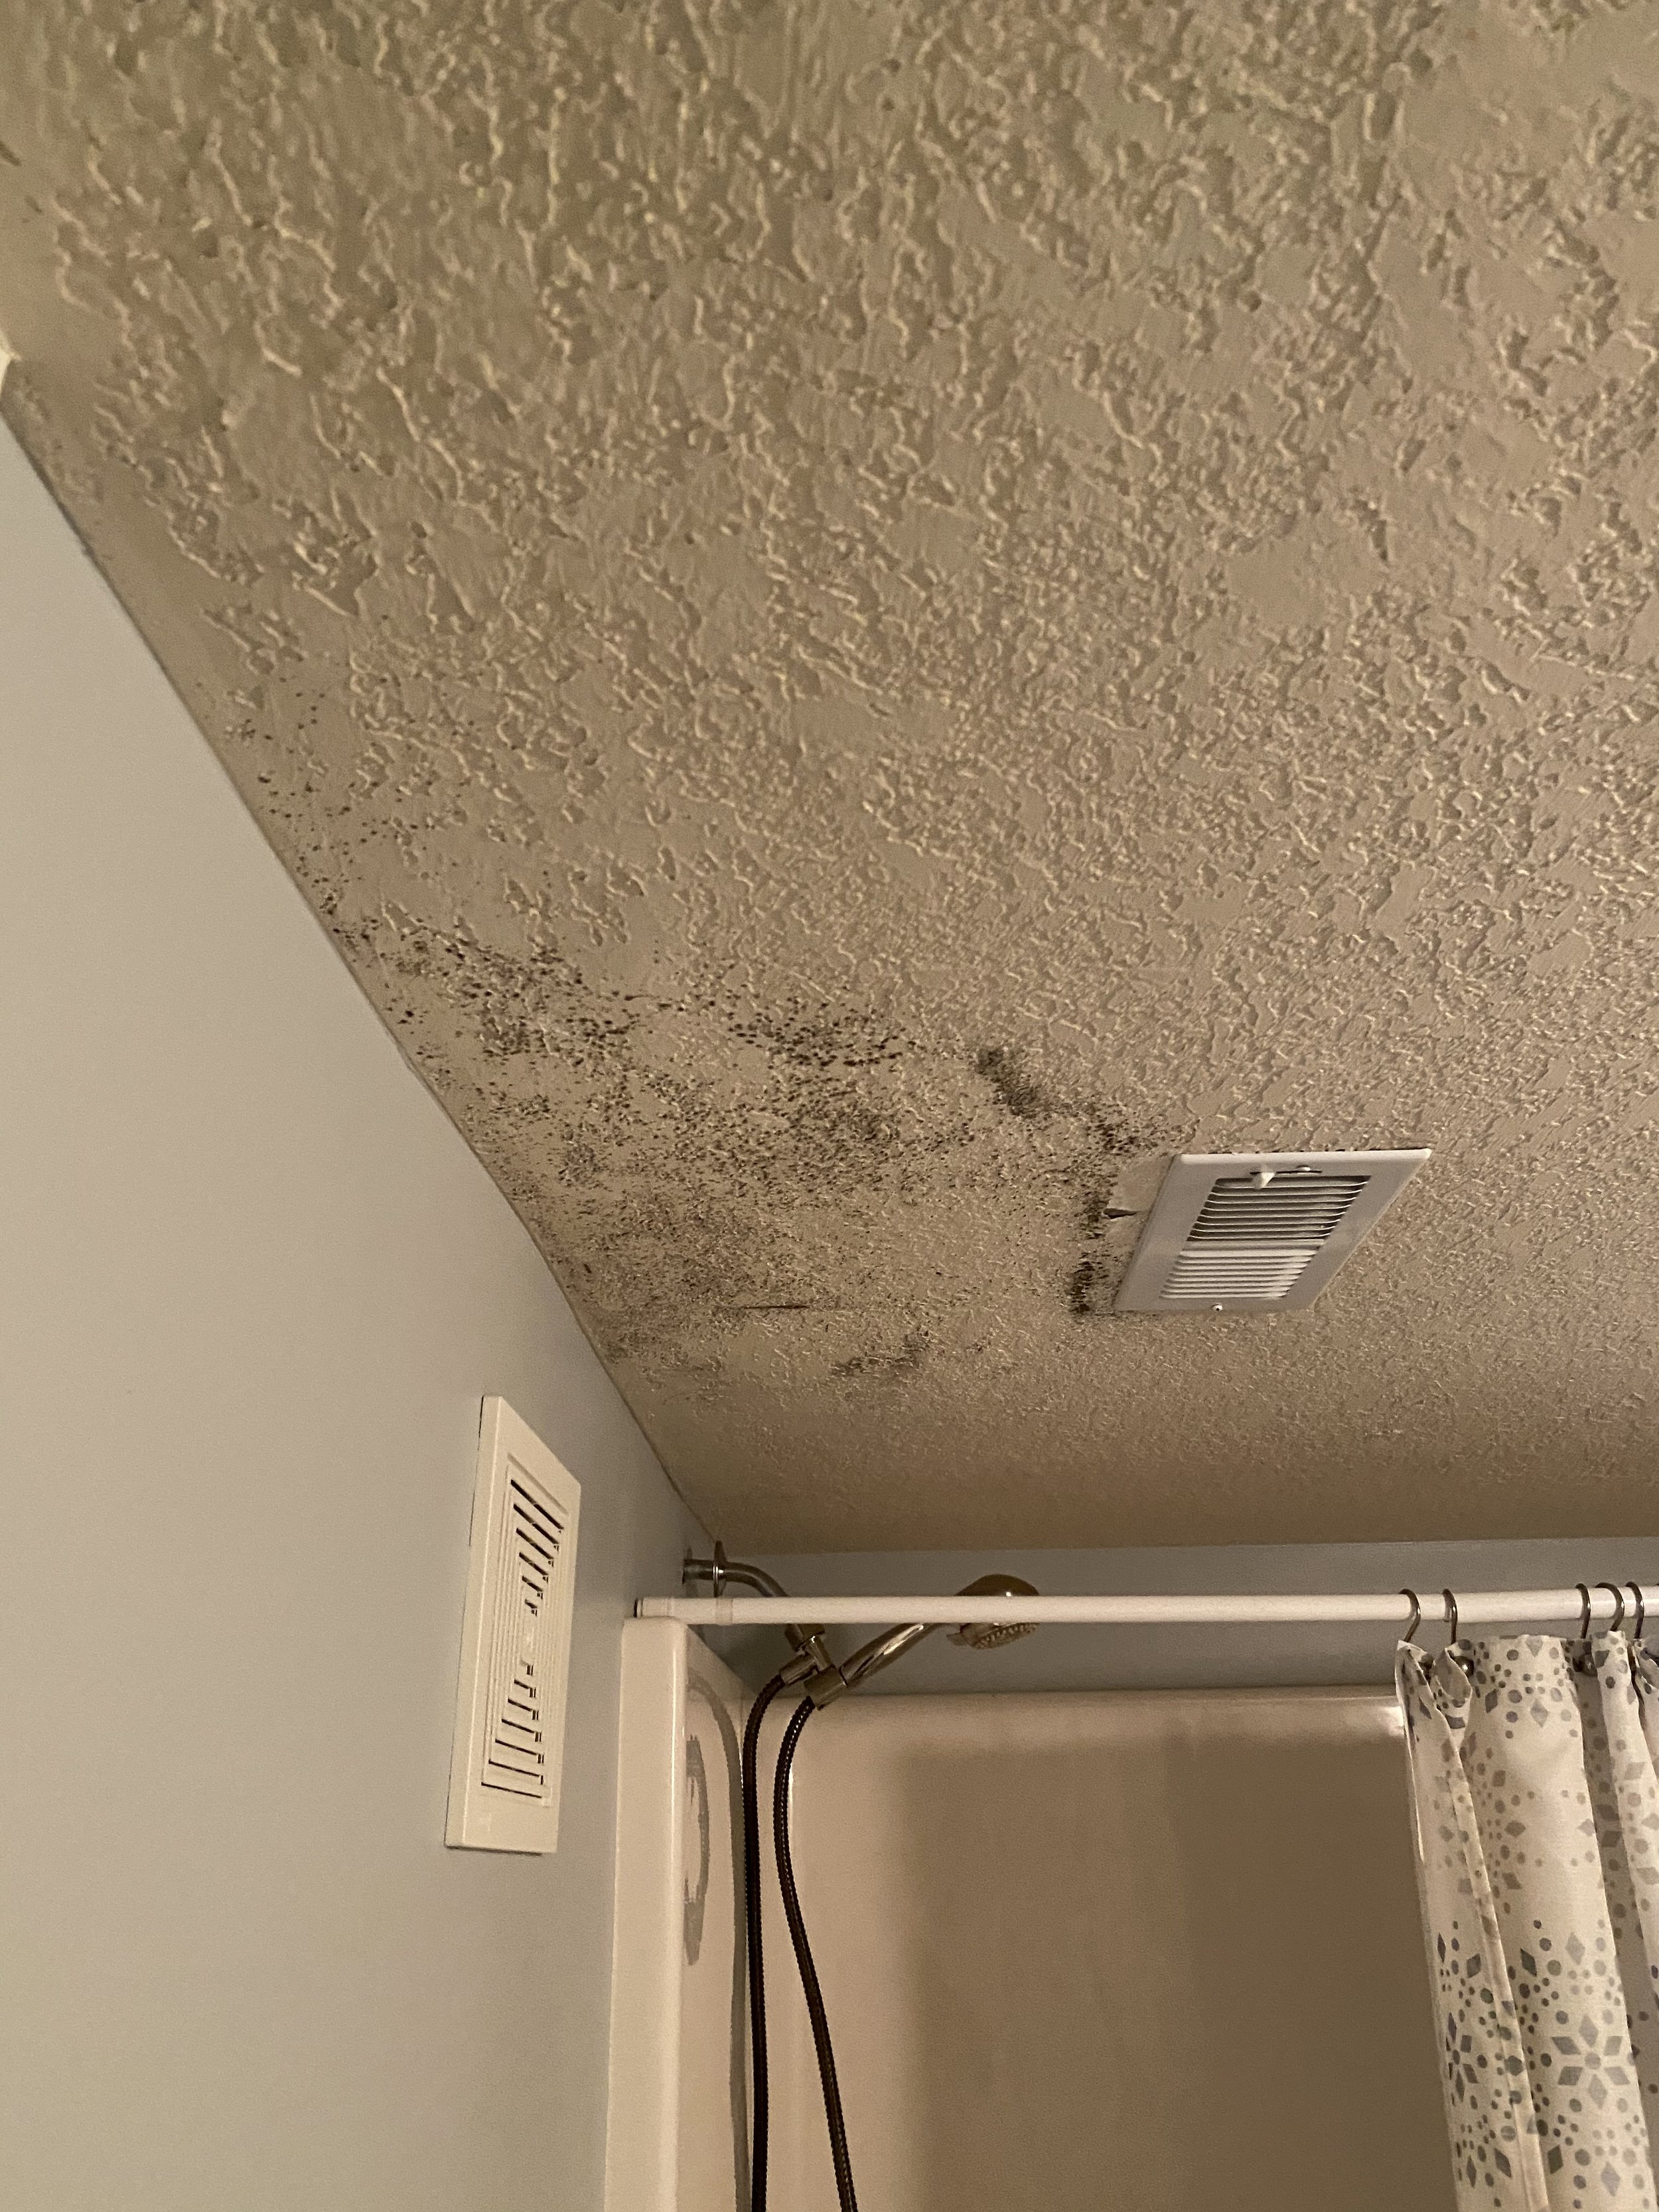 Mold photo on ceiling before - Ankeny house.jpg